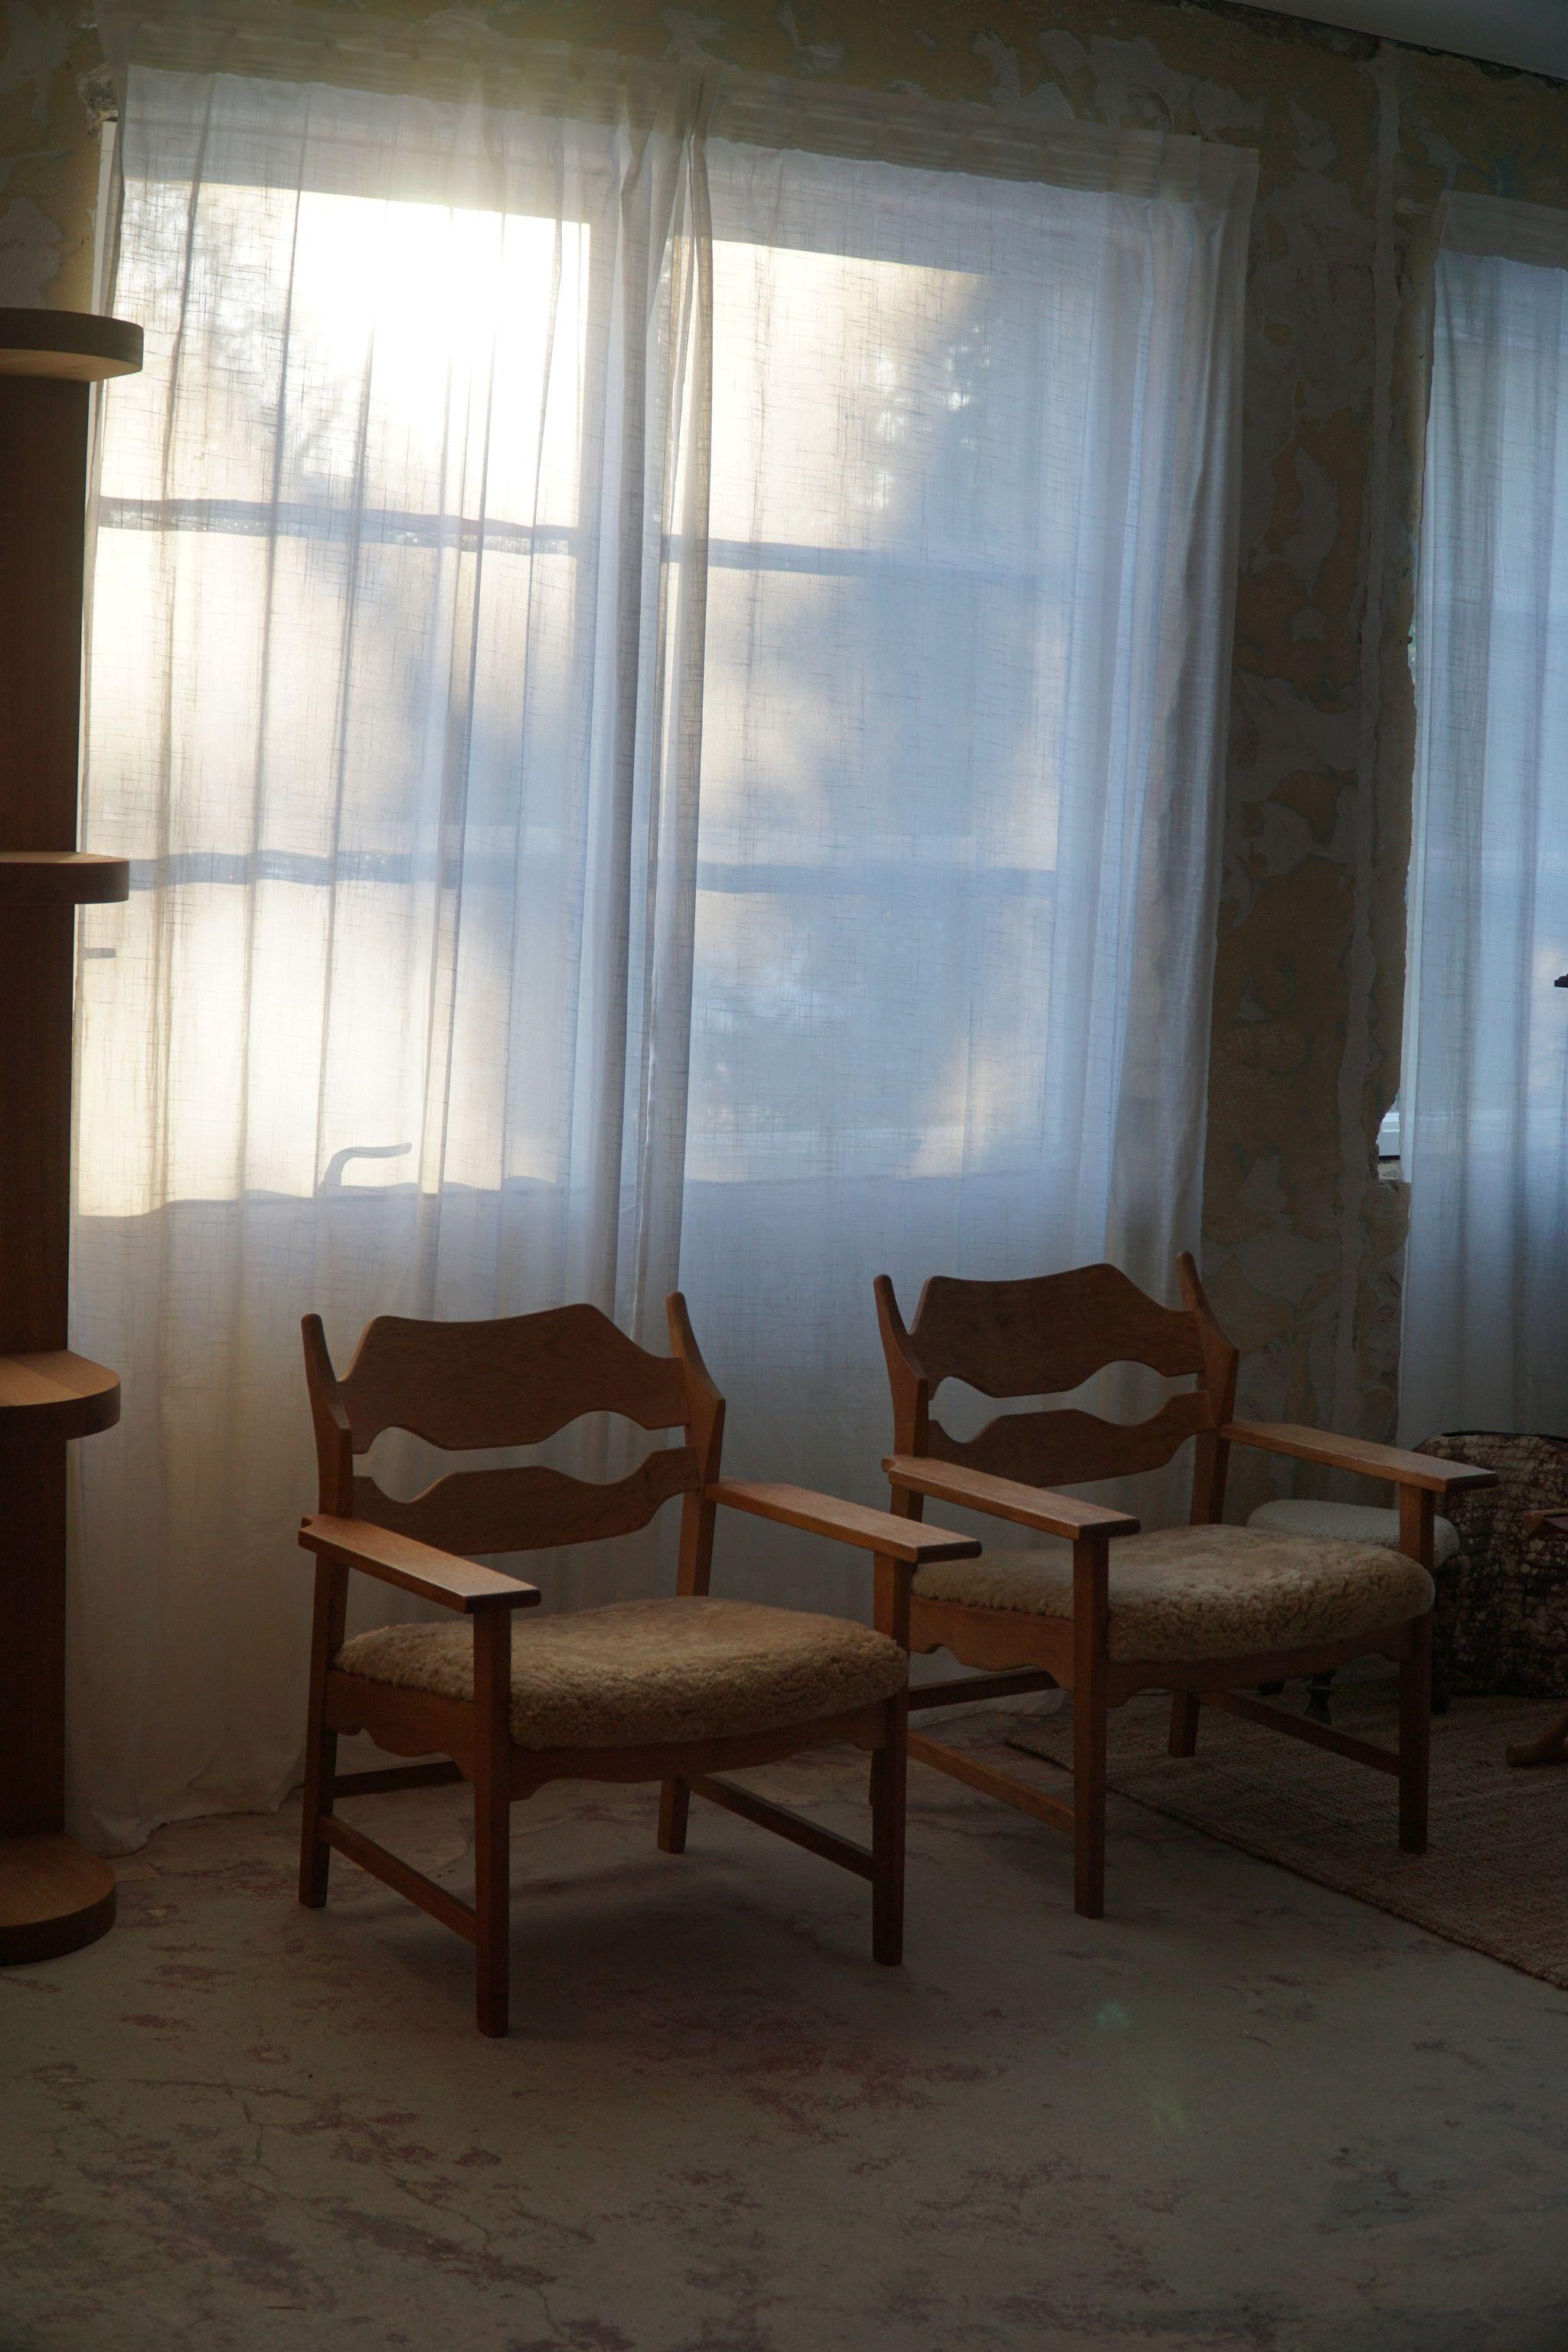 Razorblade Lounge Chair by Henning Kjærnulf, Danish Mid Century Modern, 1960s For Sale 6